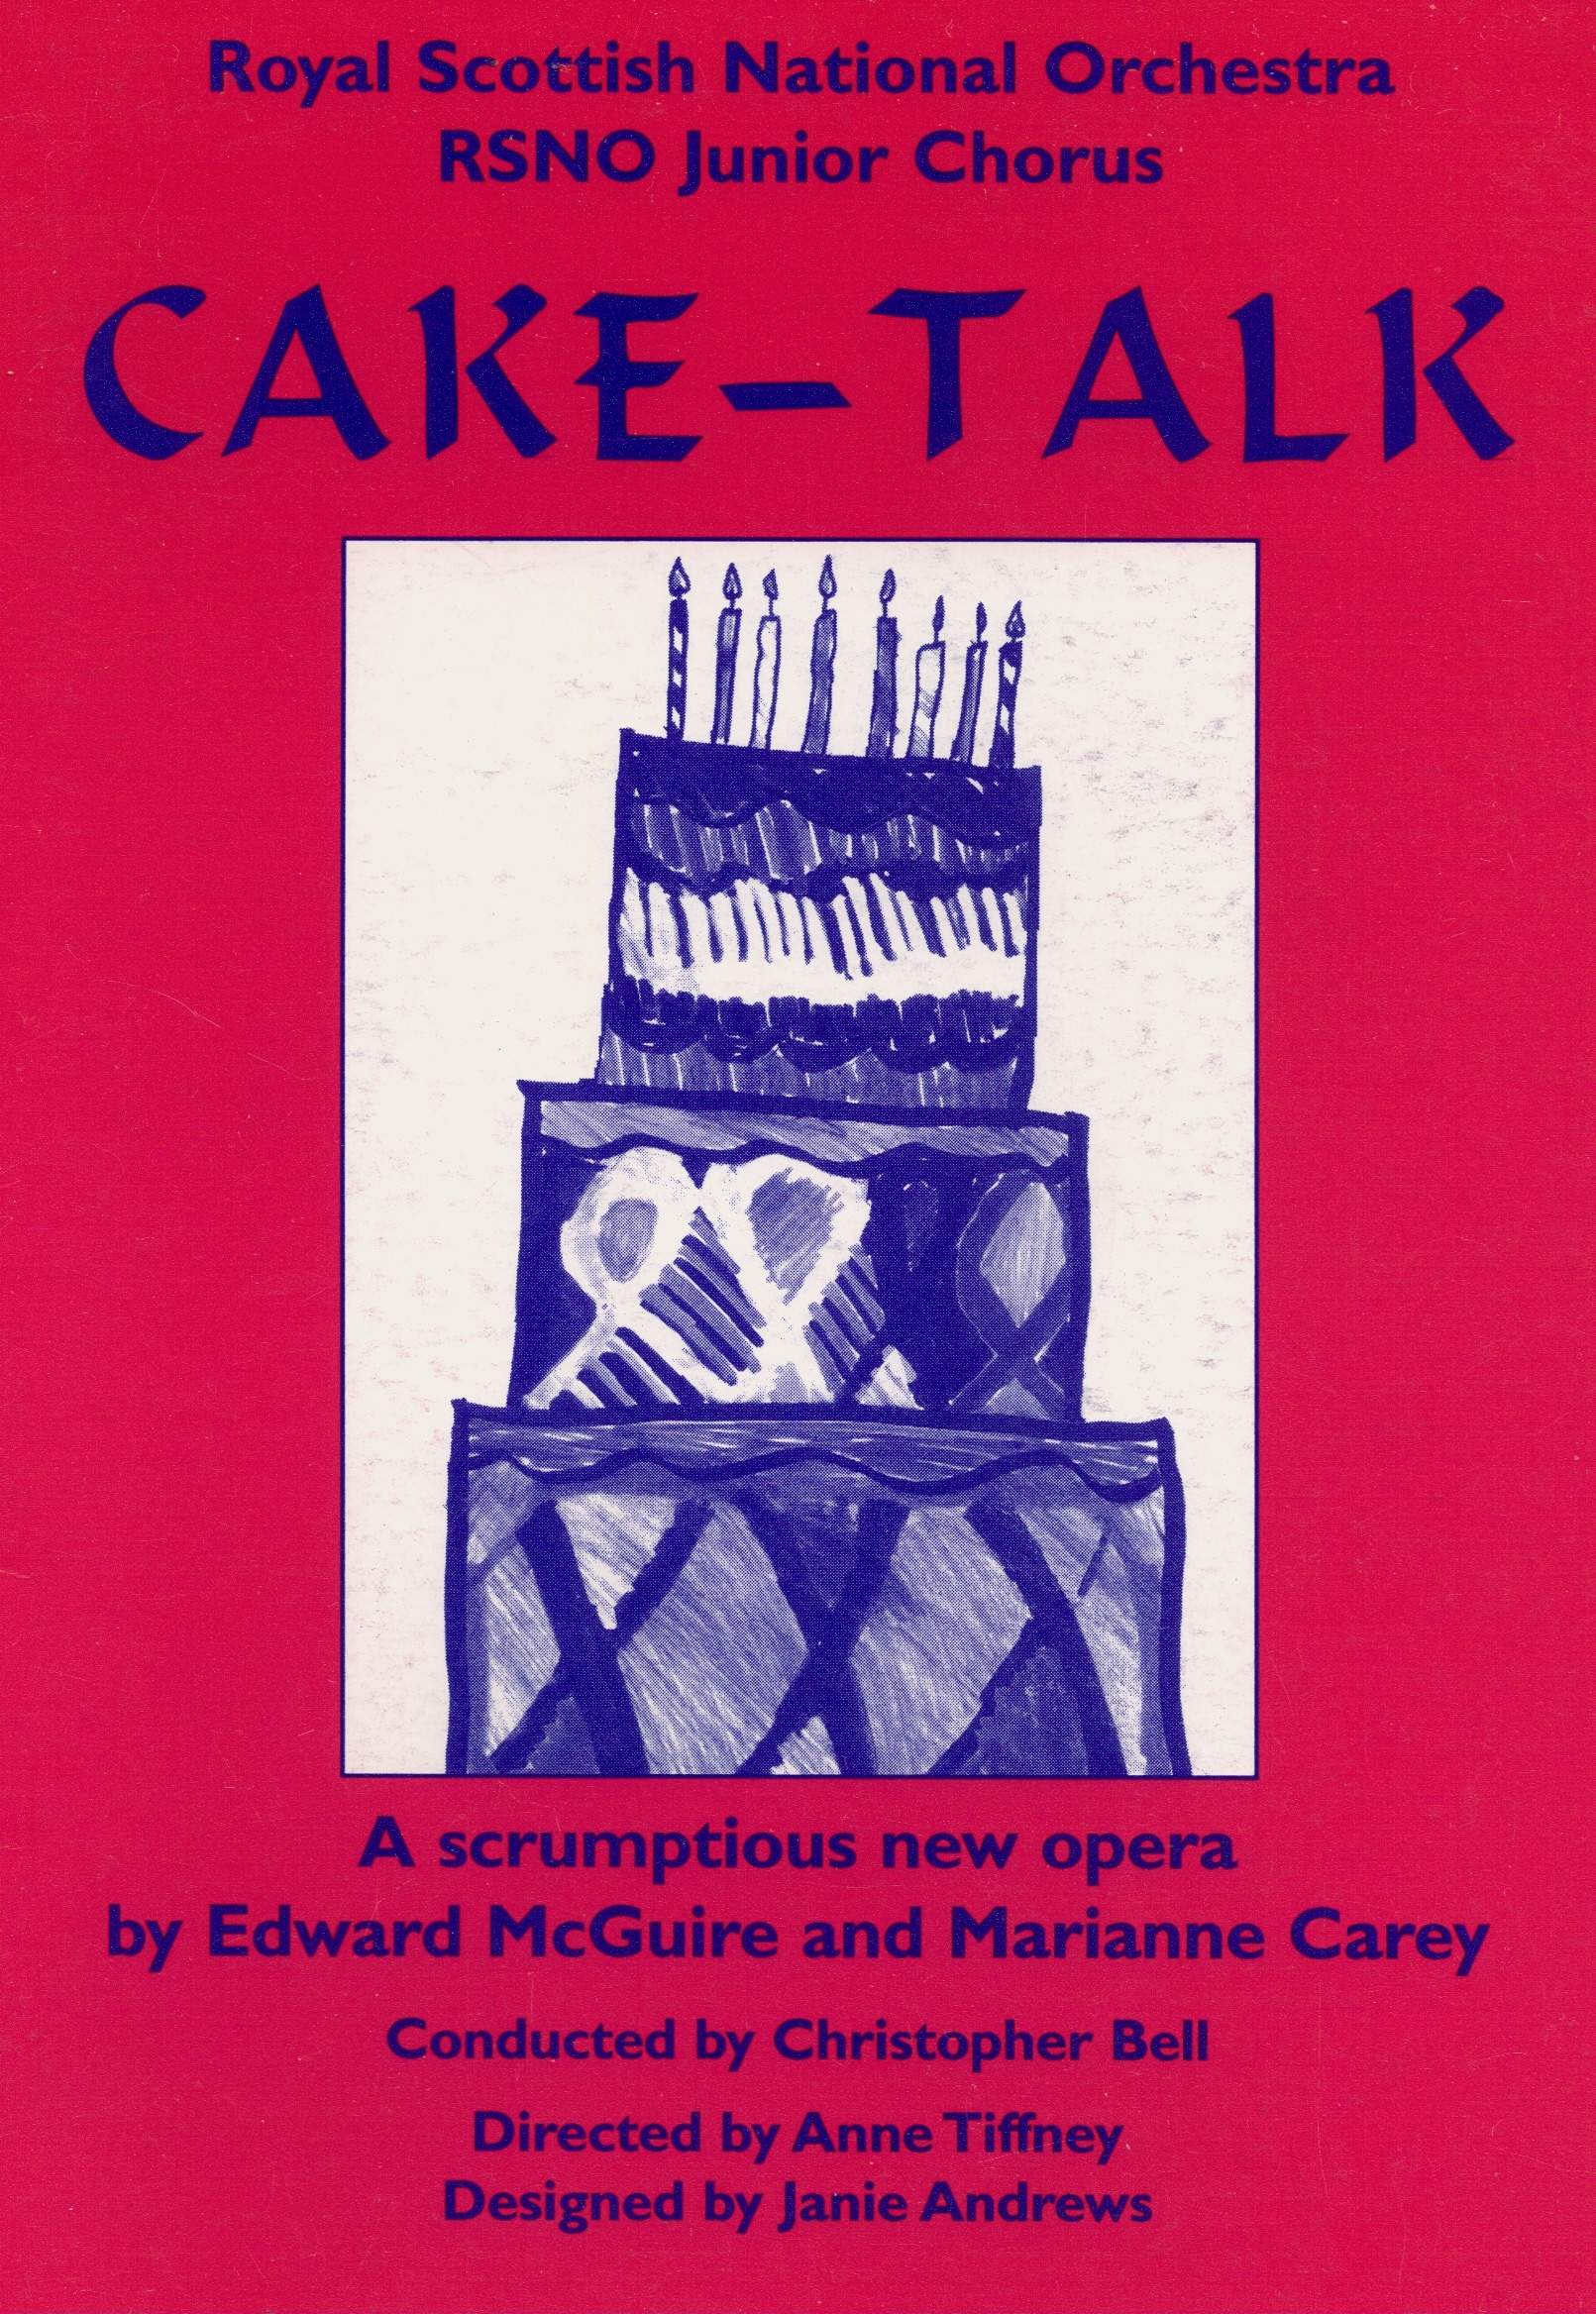 Eddie's opera Cake-Talk to a libretto by Marianne Carey programme 1996